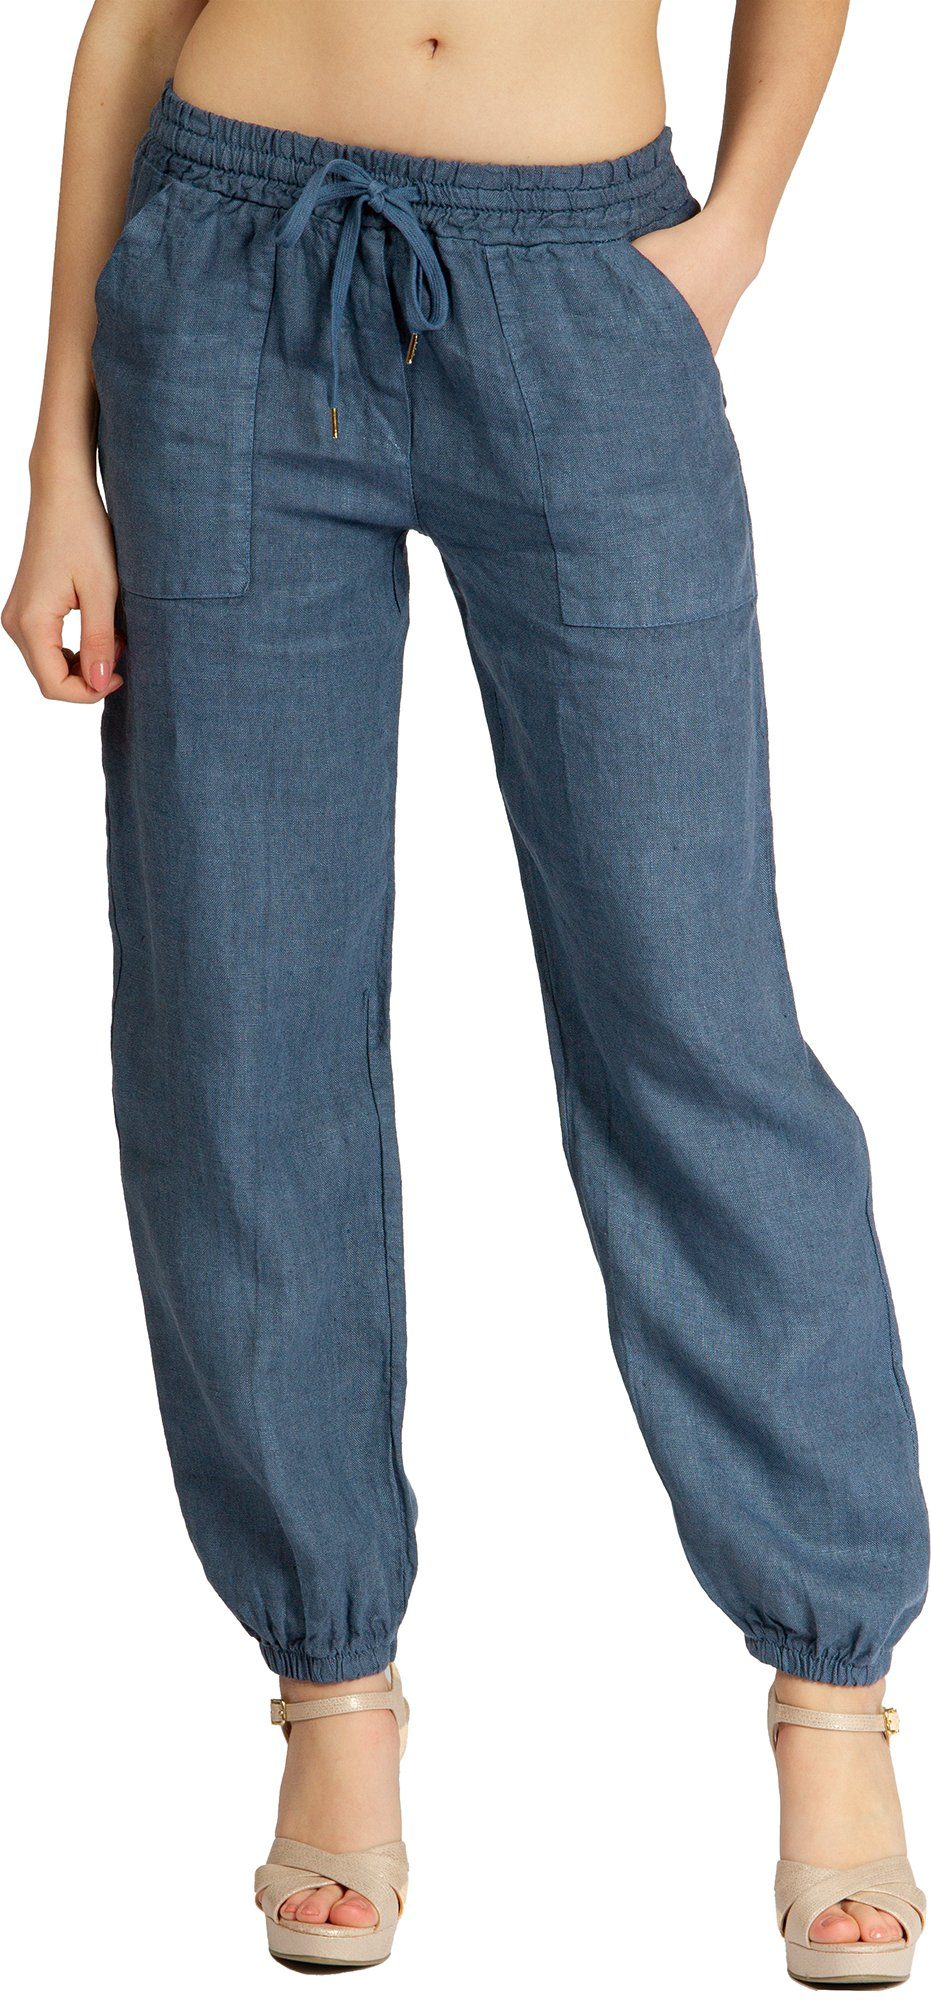 Caspar Damen blau jeans Sommer Leinenhose Leinenhose Casual KHS051 elegante